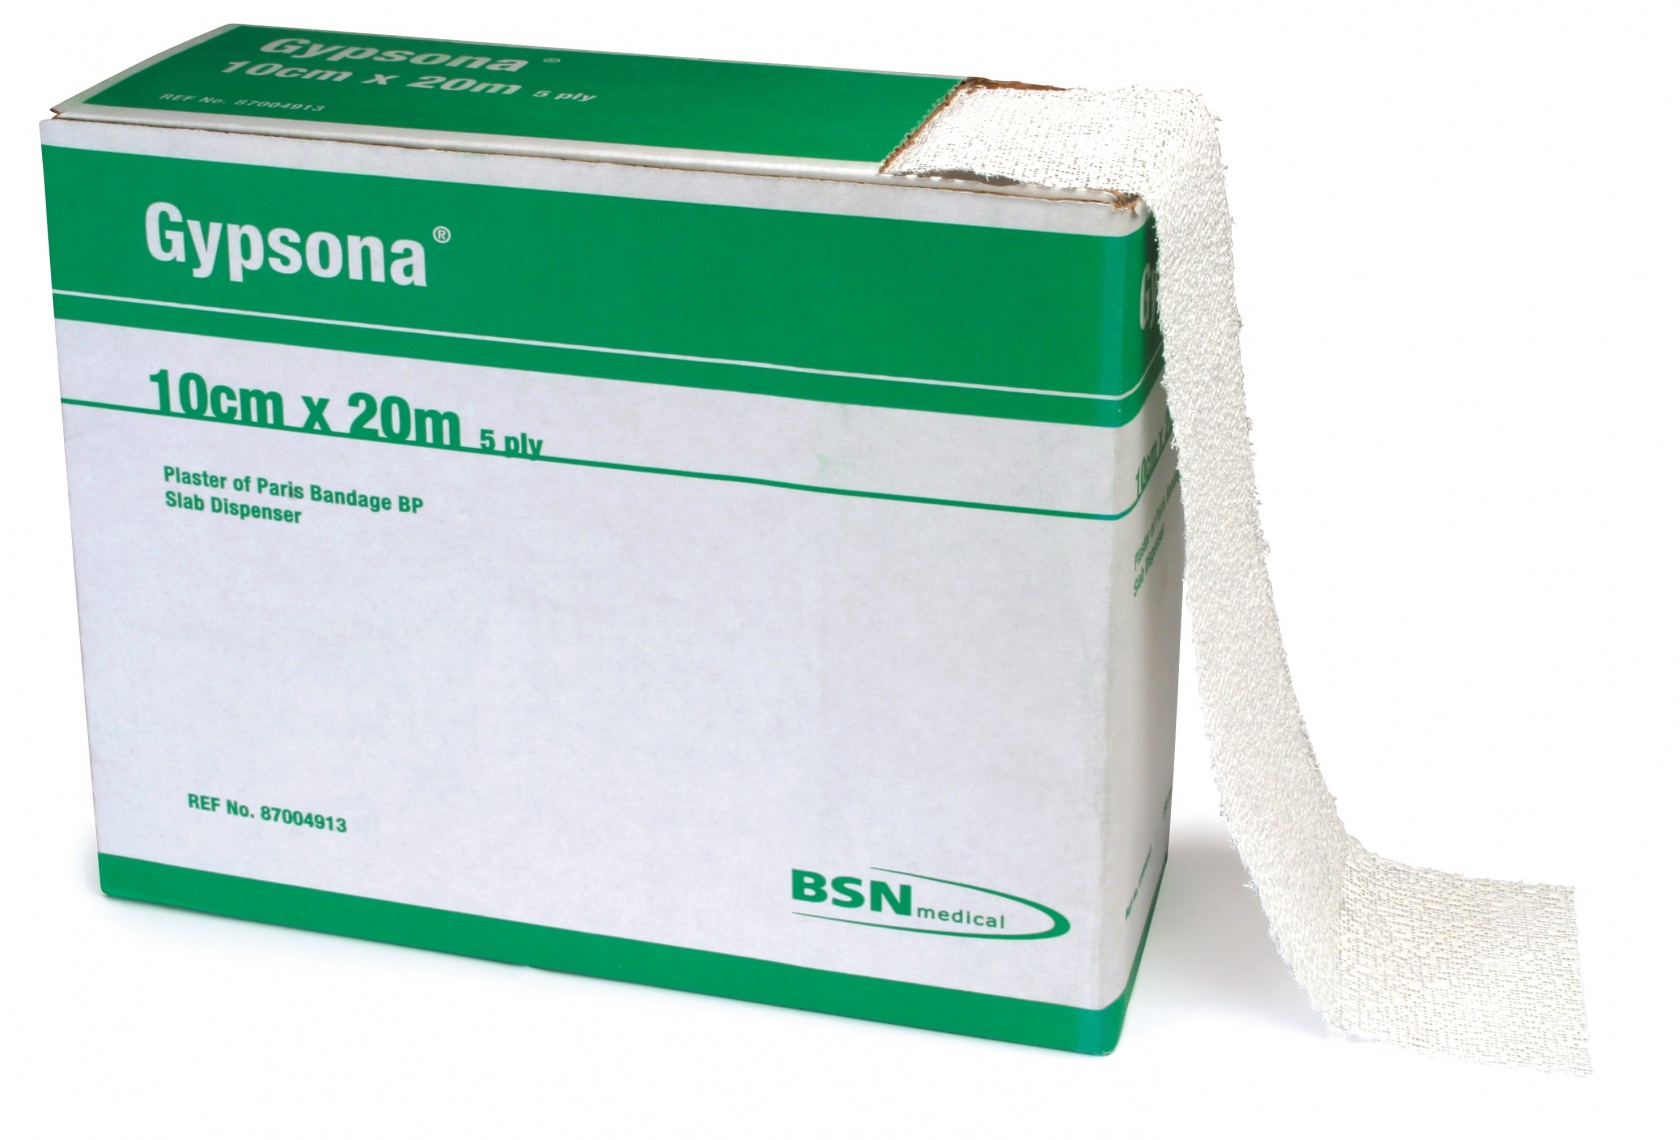 Gypsona Plaster of Paris Bandage Slab Dispenser 20cm x 20m image 0